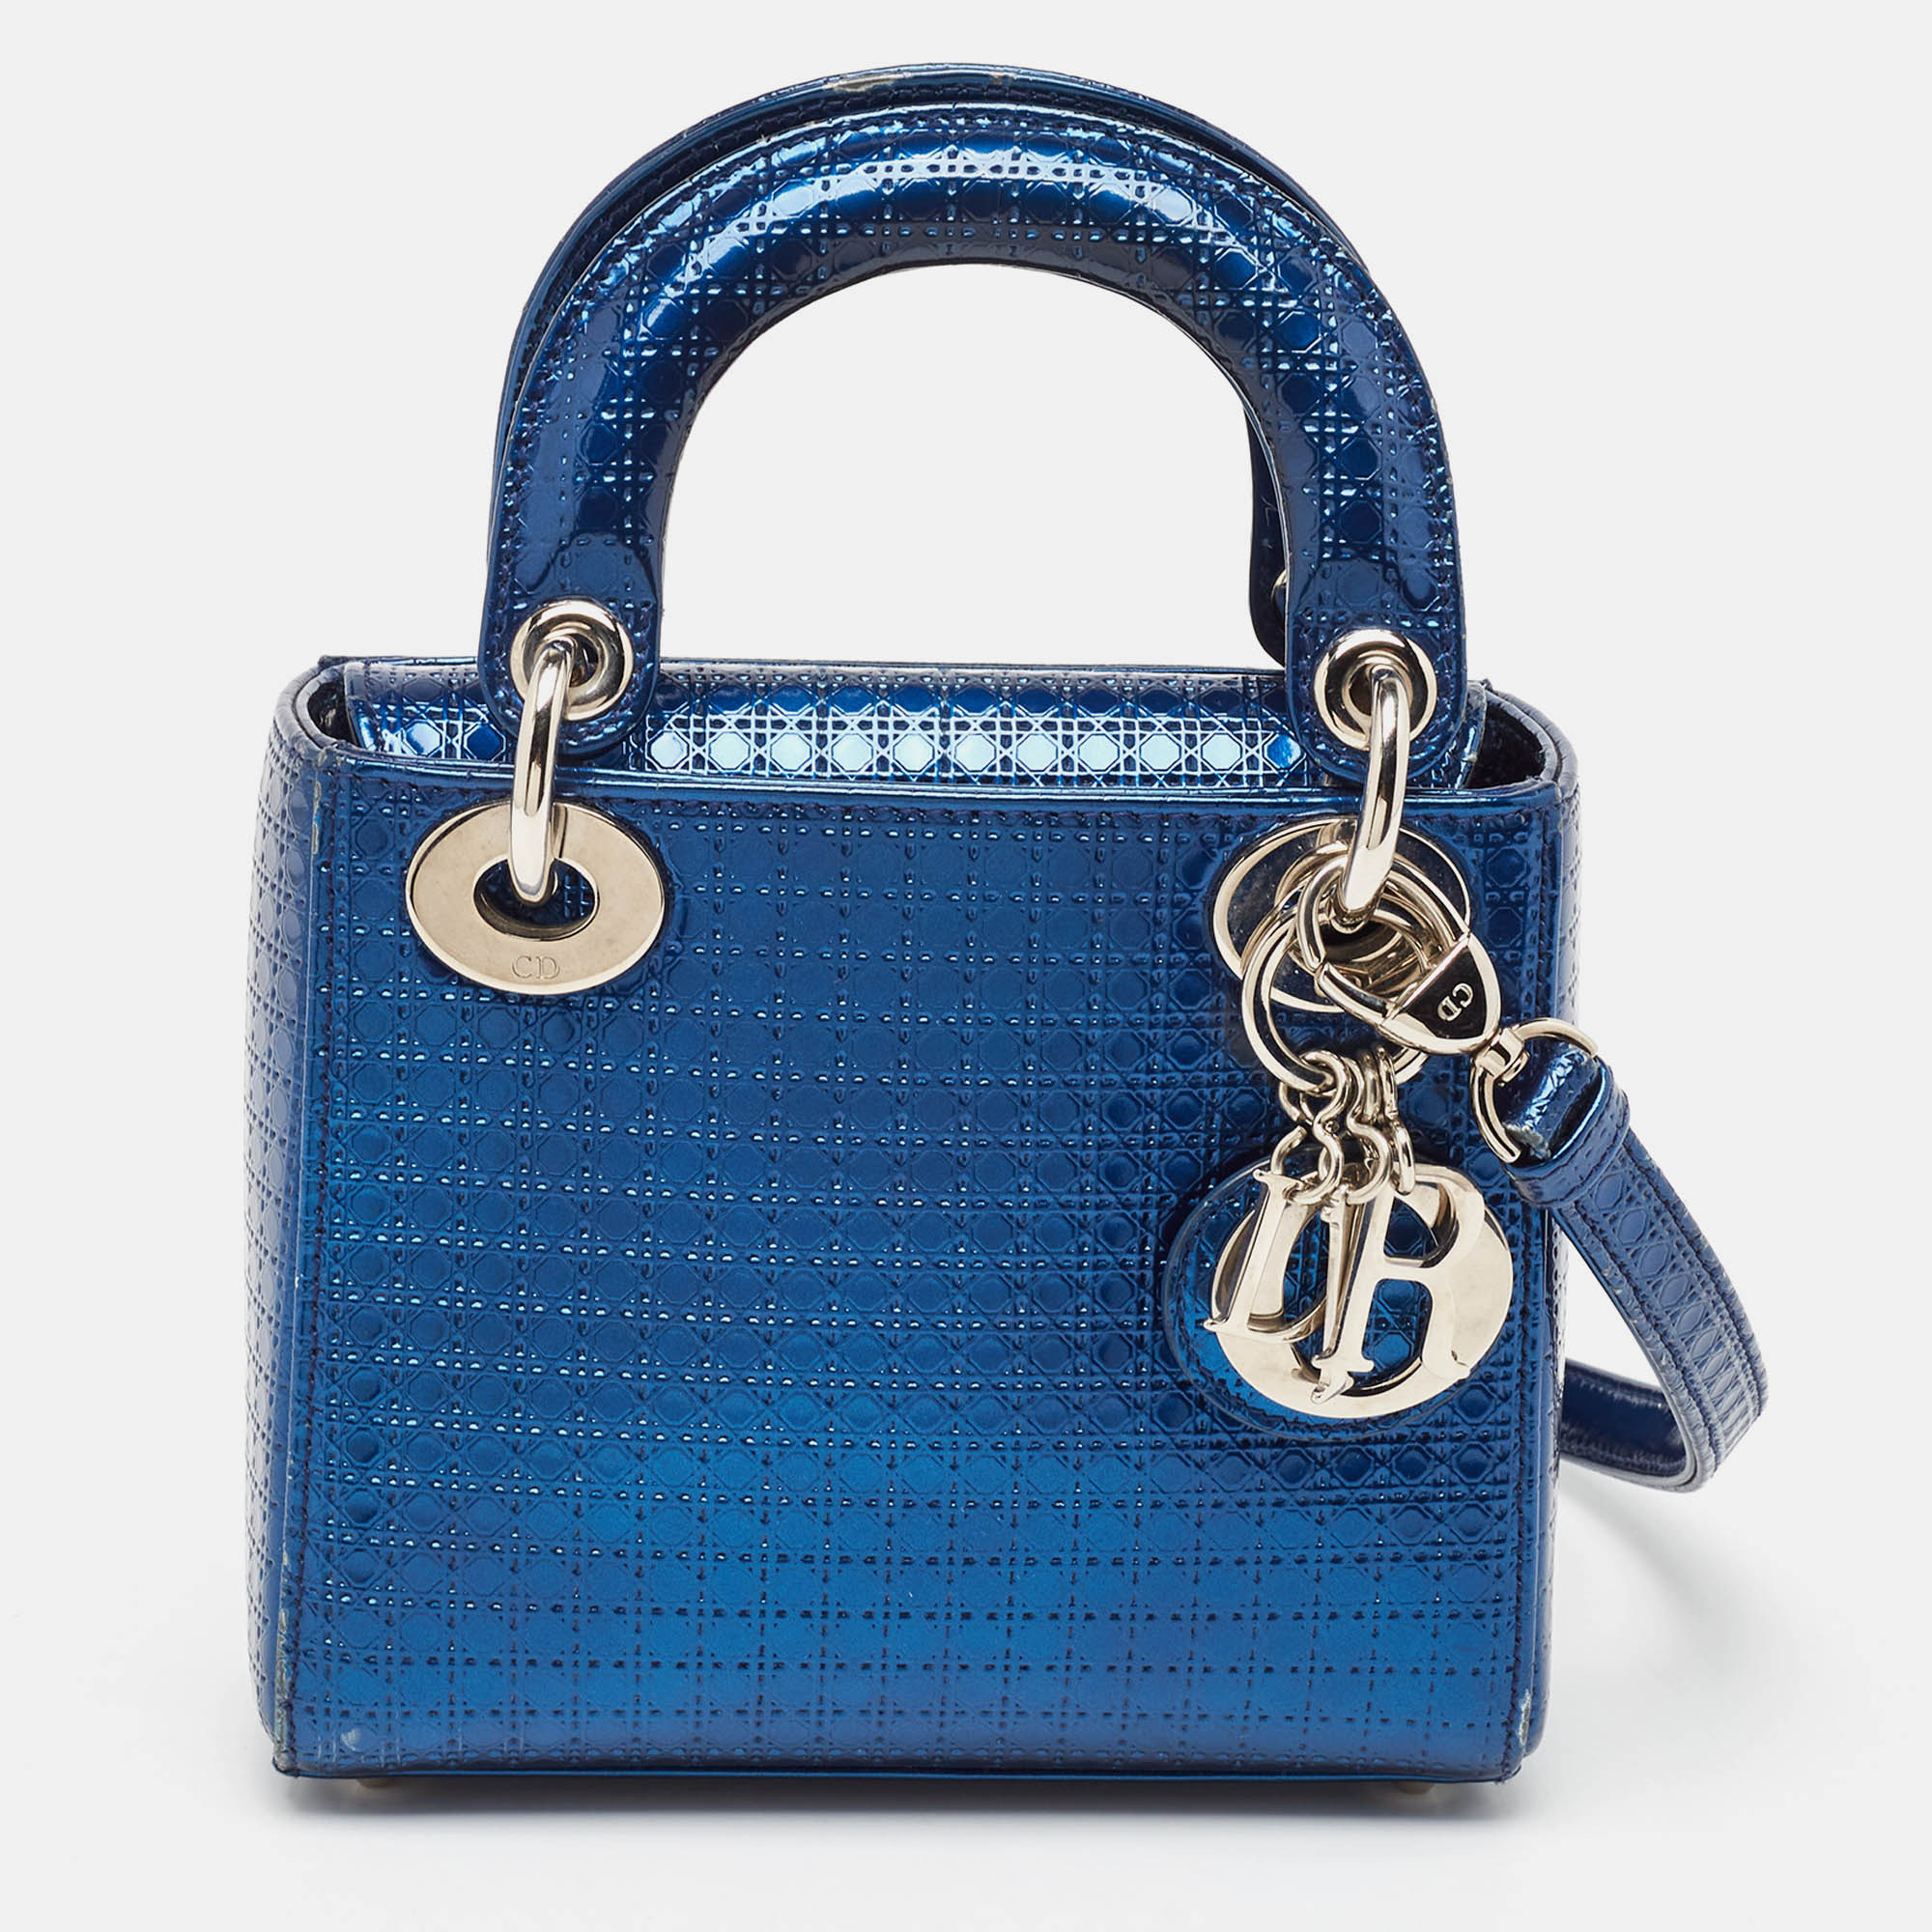 Dior metallic blue microcannage patent leather mini lady dior tote